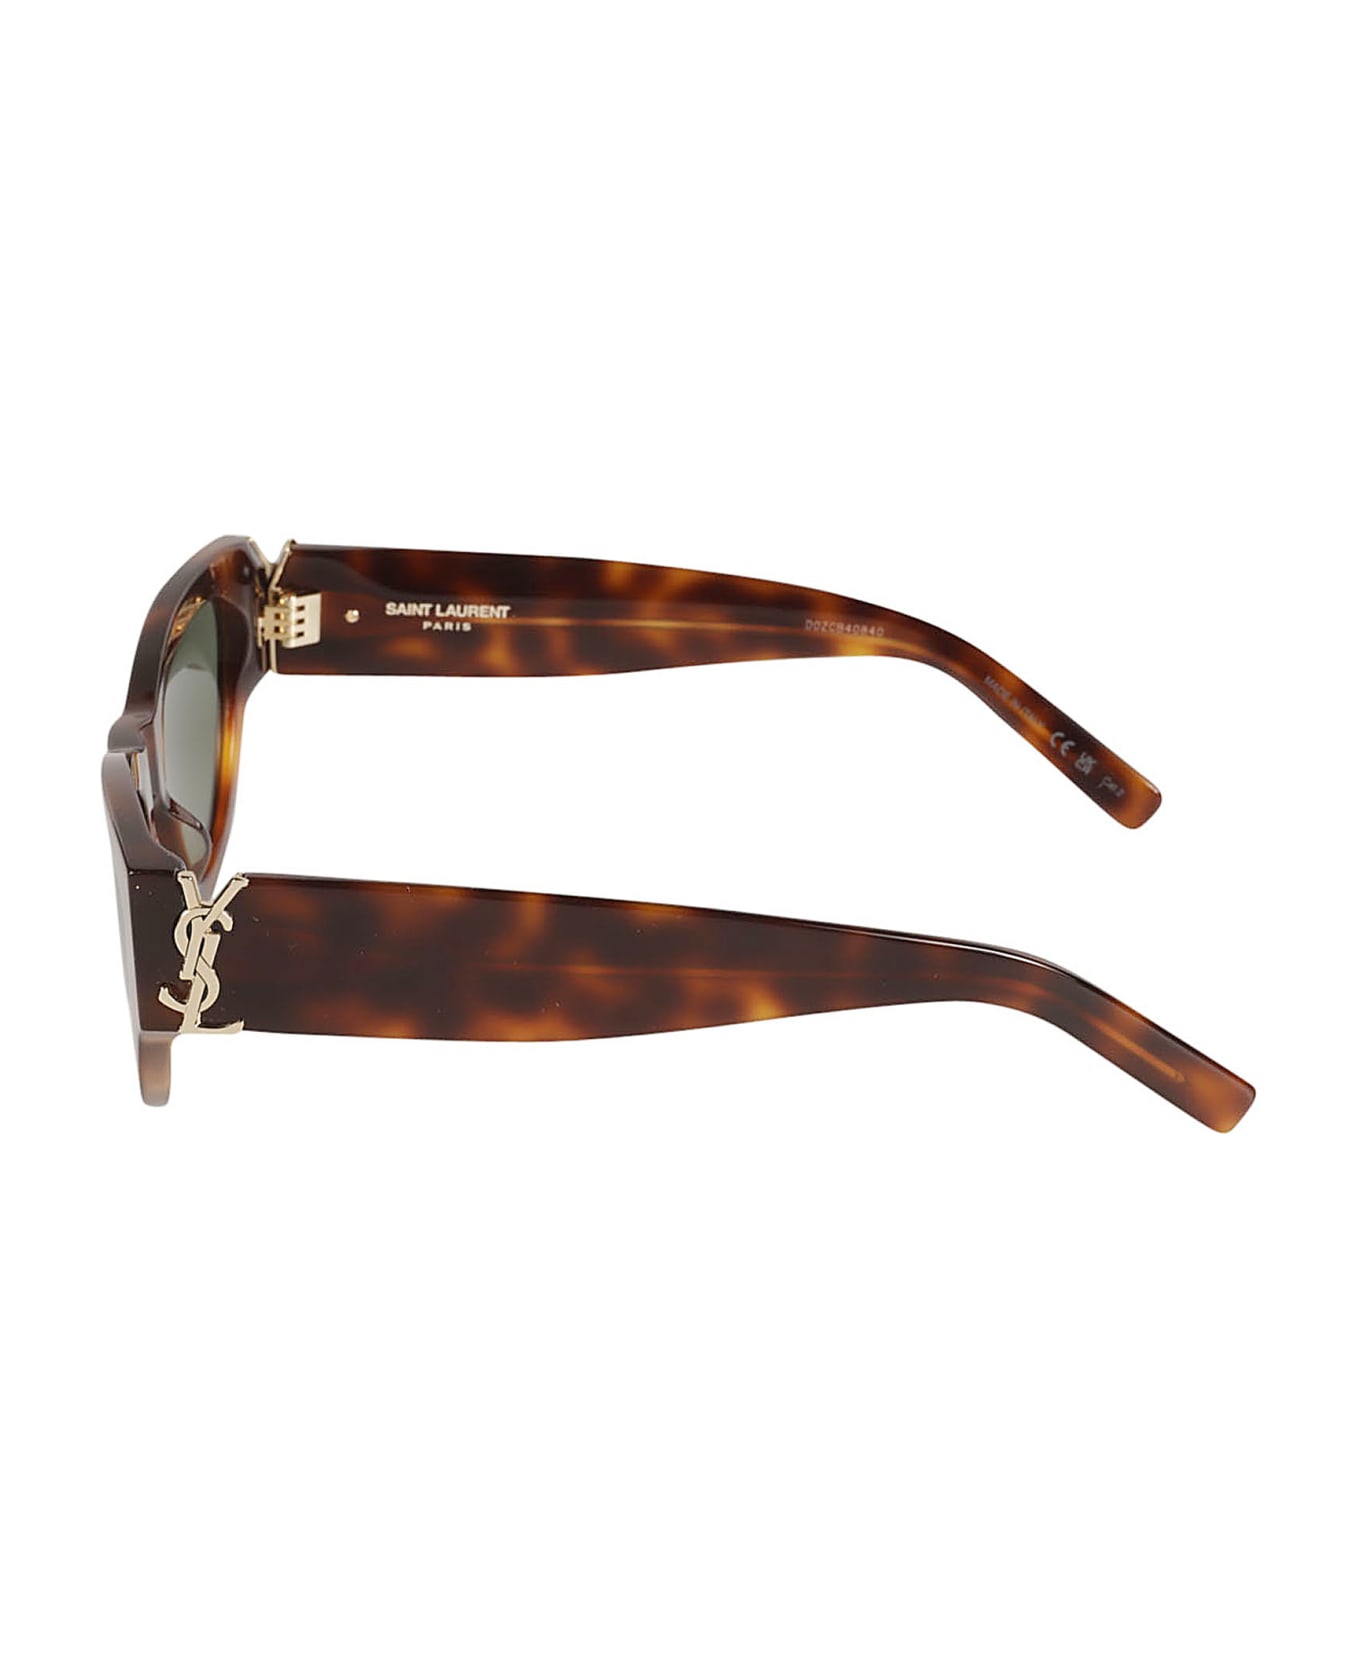 Saint Laurent Eyewear Ysl Hinge Flame Effect Oval Frame Sunglasses - Havana/Green